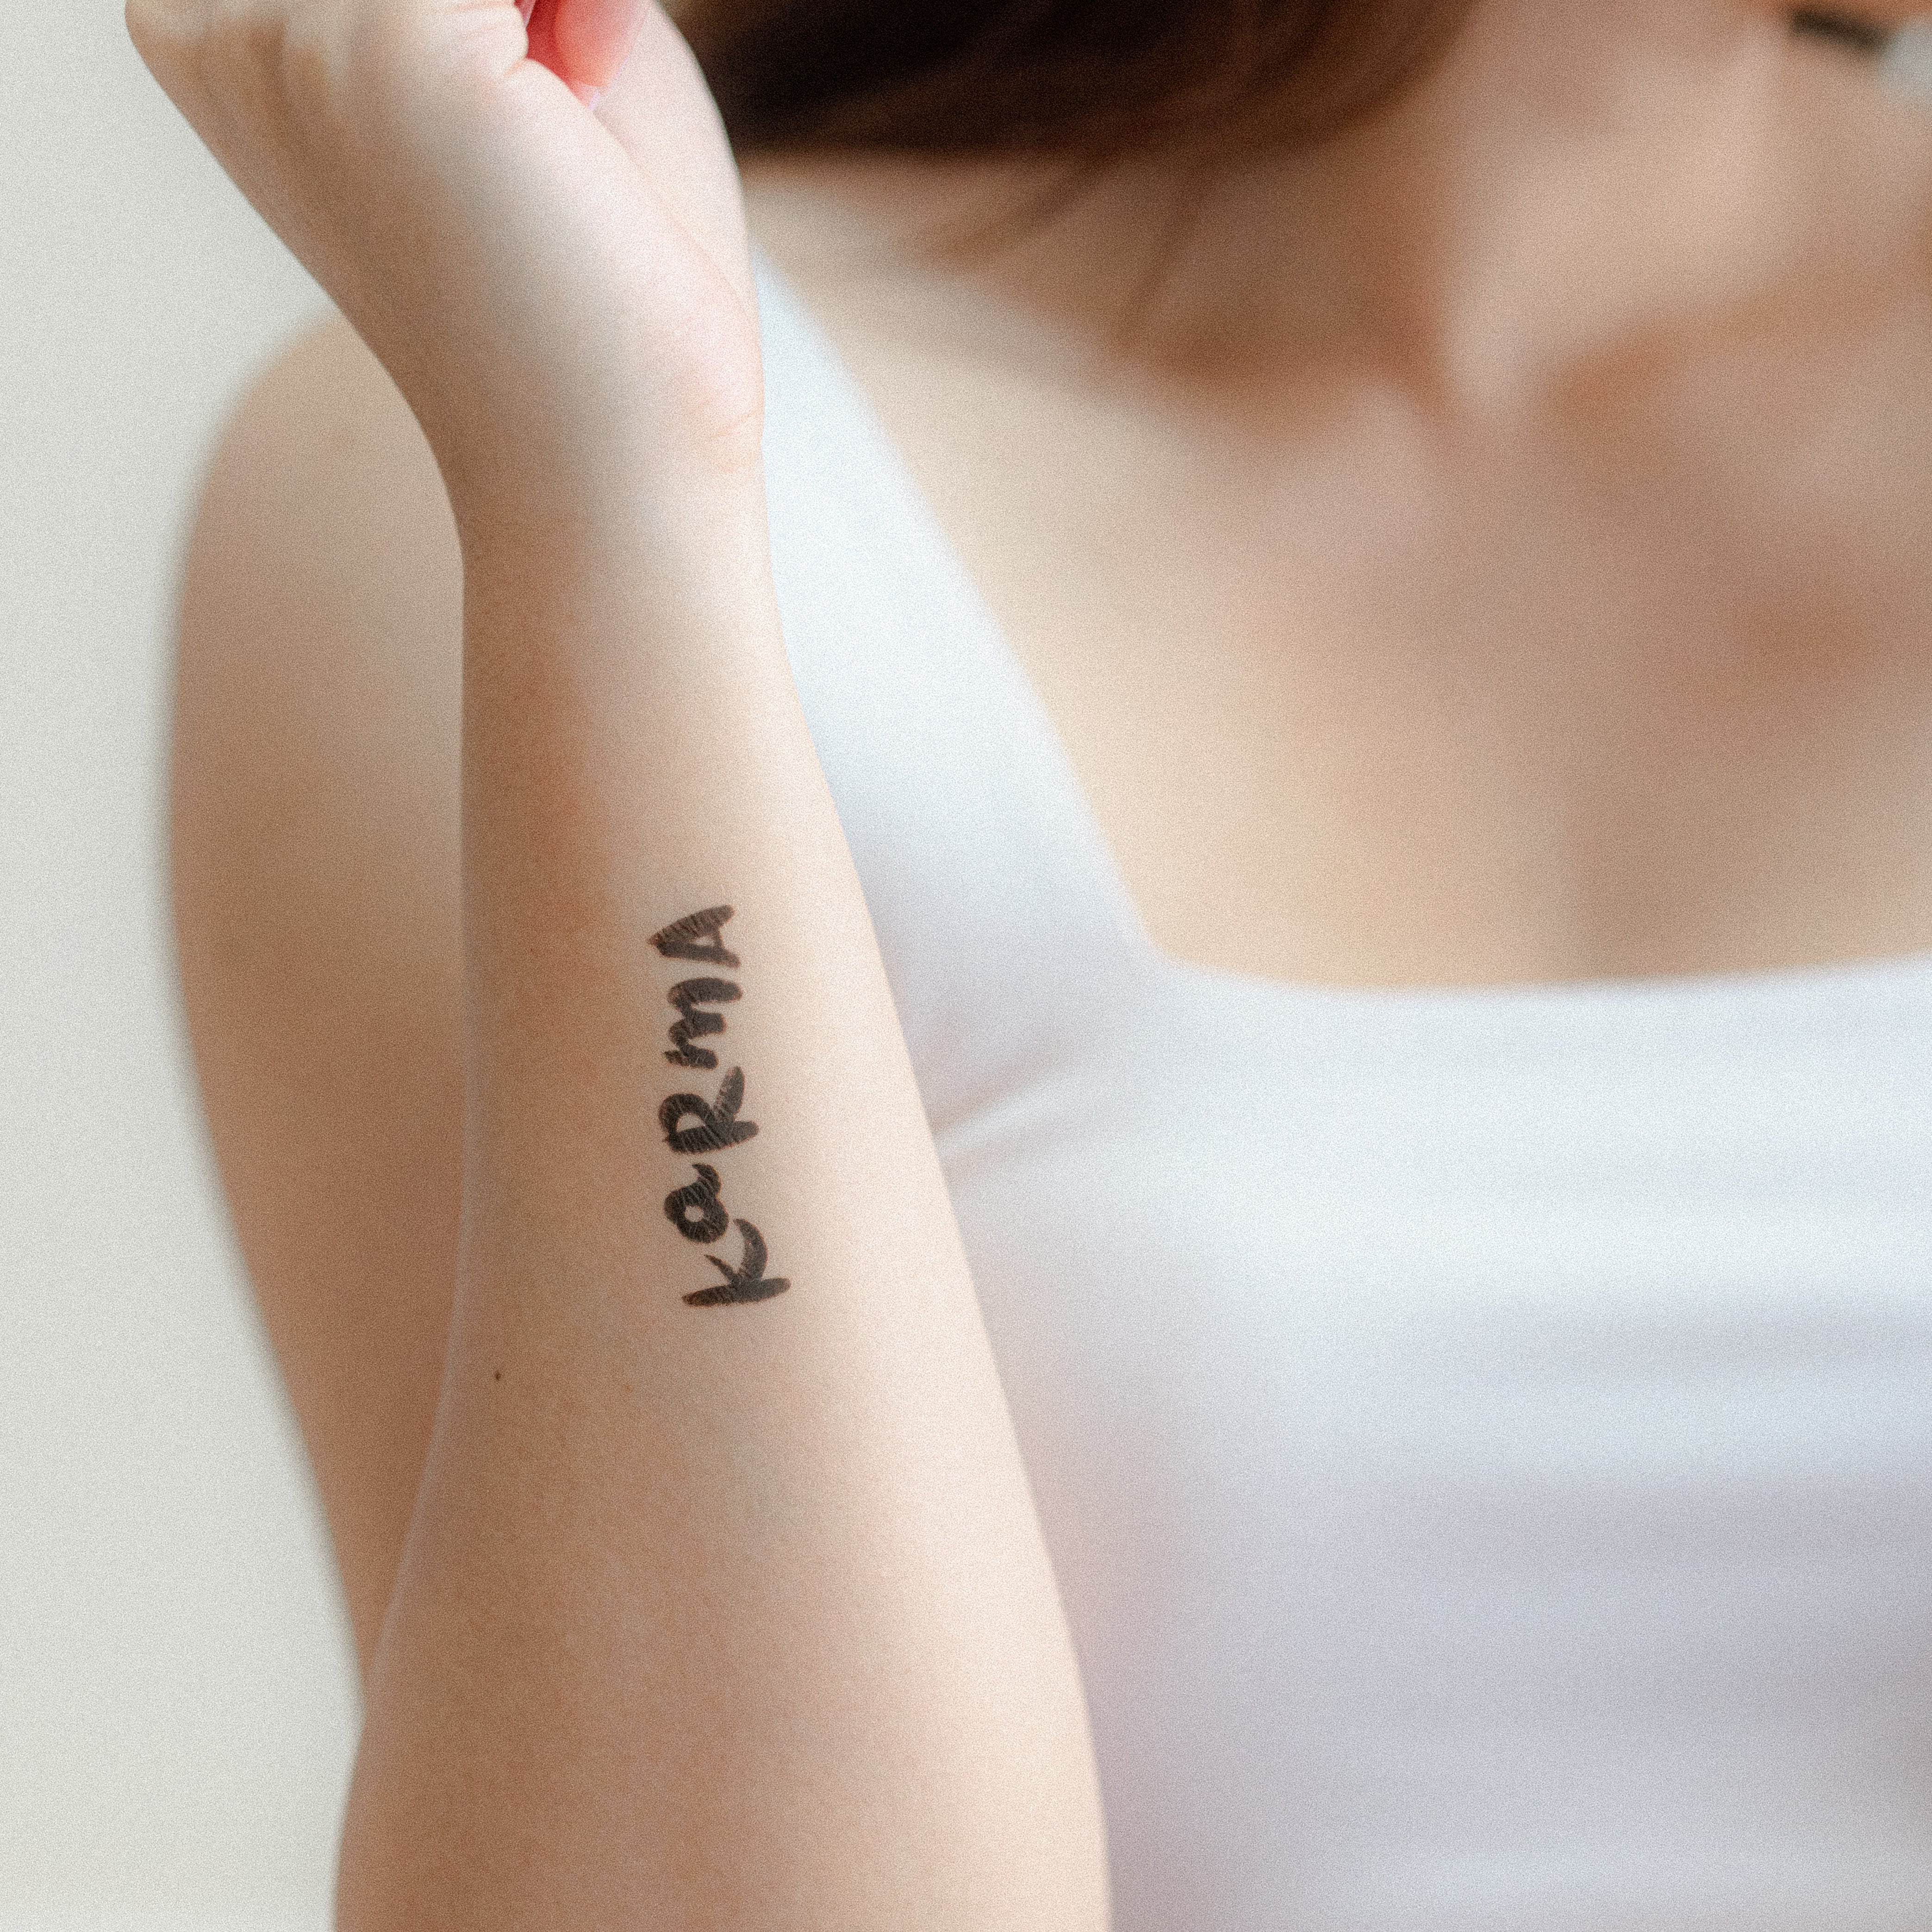 my karma tattoo 992012 | My first tattoo. I believe in Karma… | Flickr